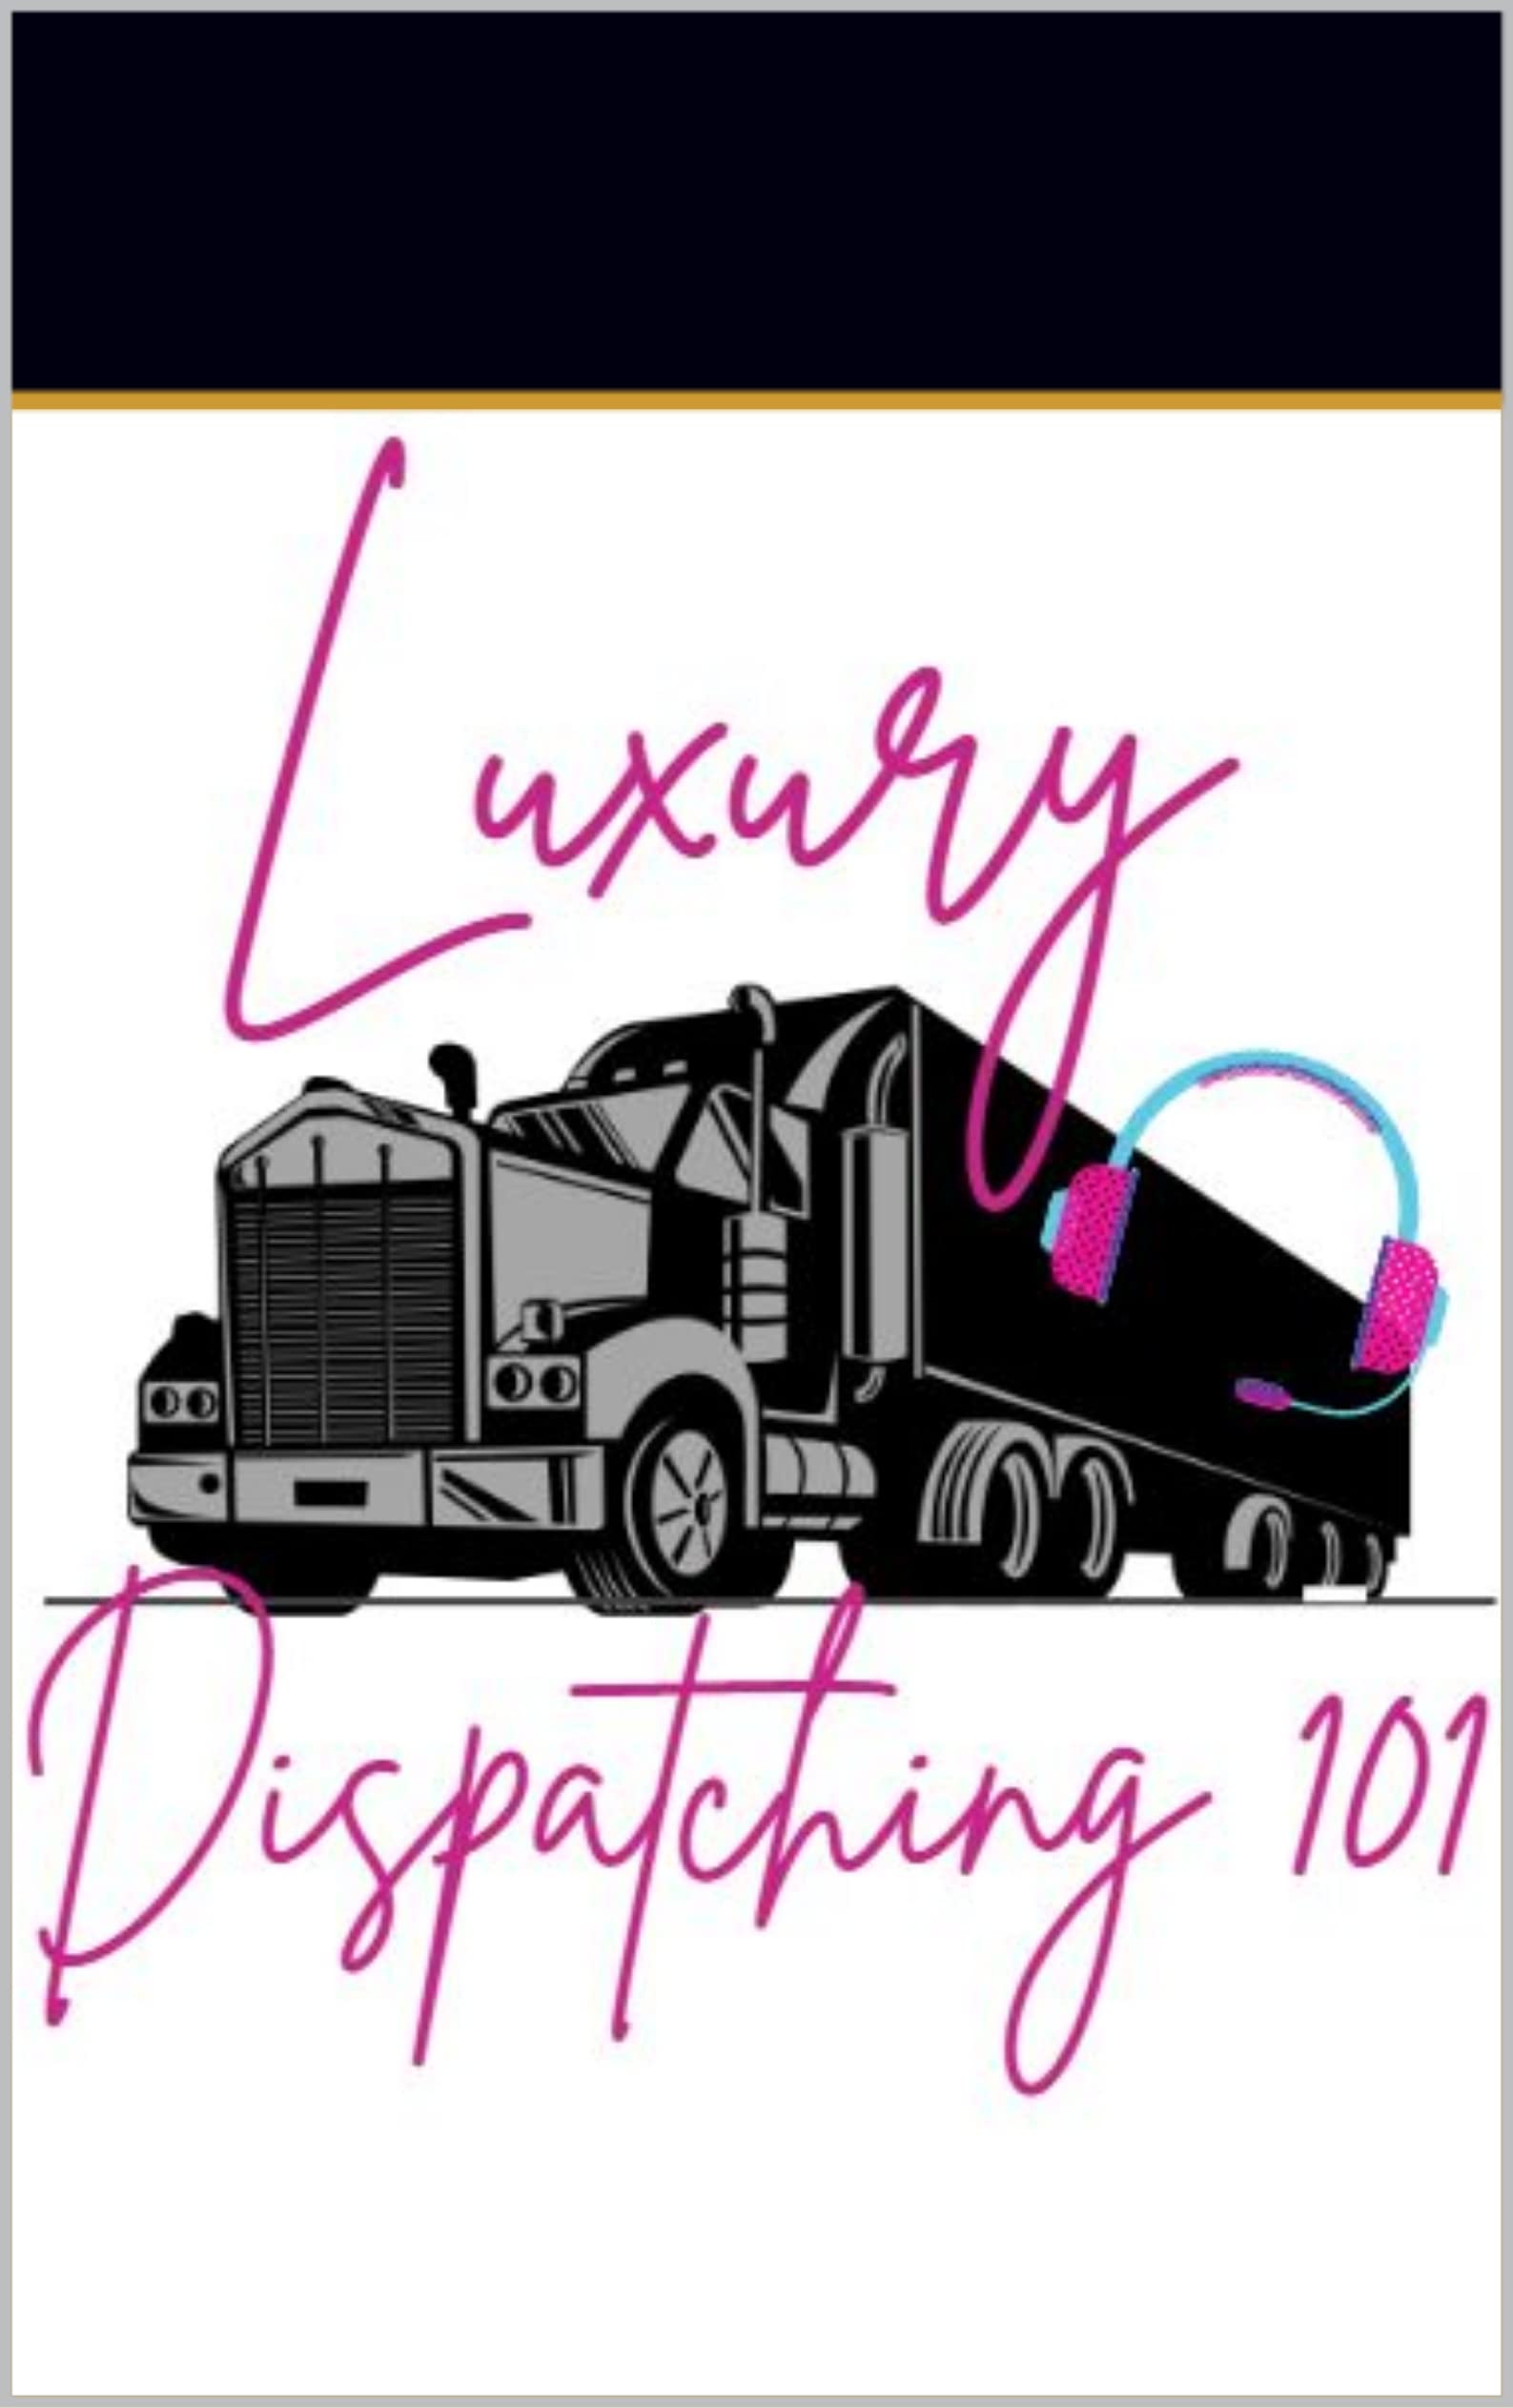 Luxury Dispatching 101 : Truck dispatching